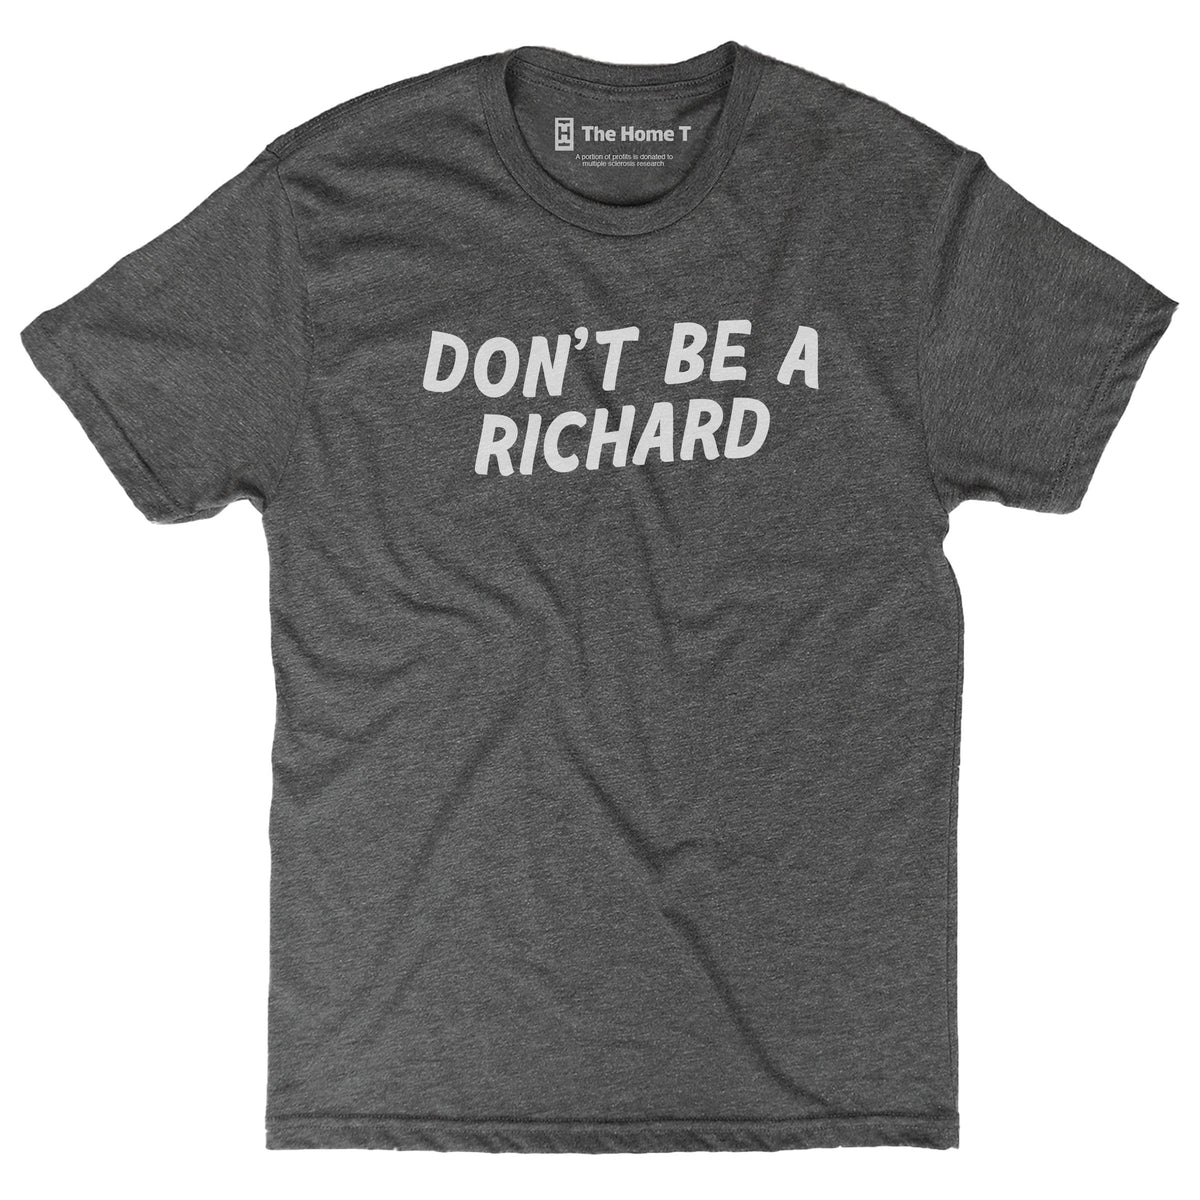 Don't be a Richard. Dark grey crew